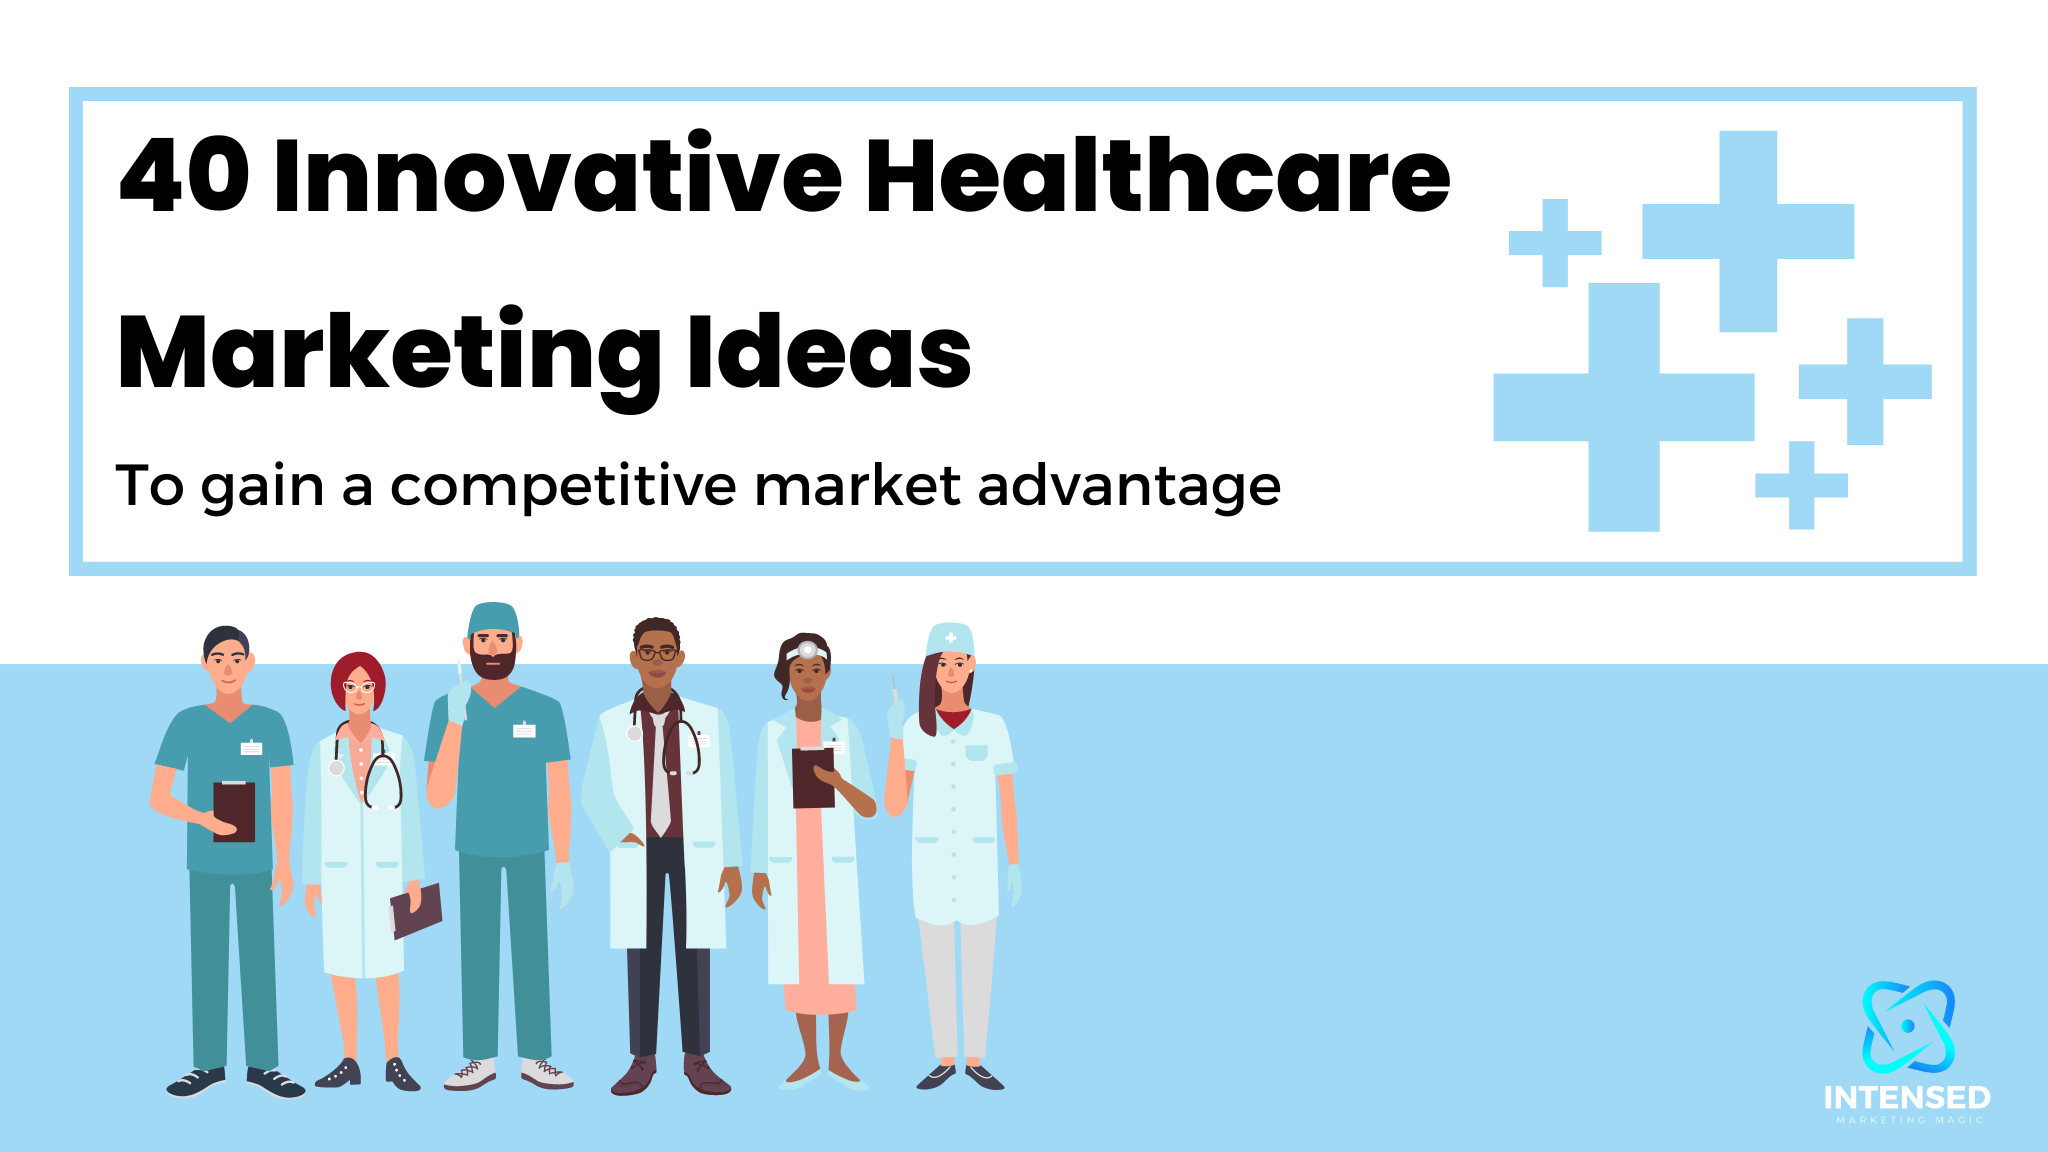 Innovative Healthcare Marketing Ideas